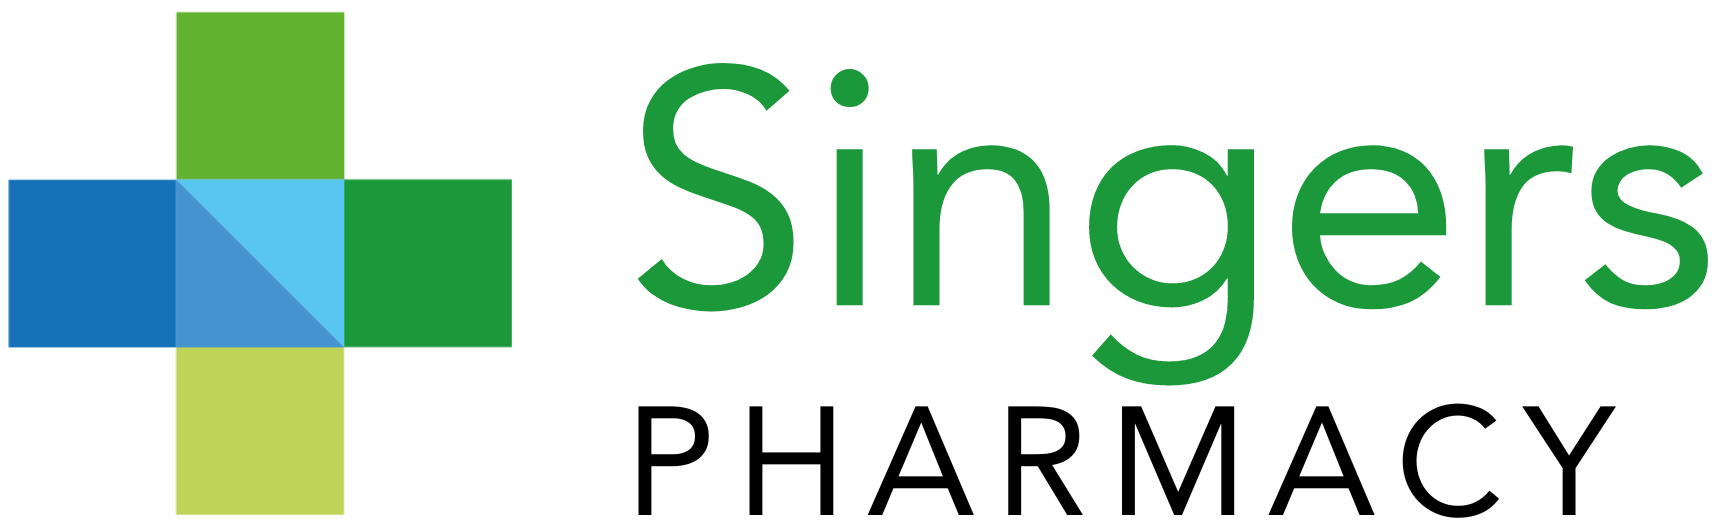 Singers Pharmacy - logo image